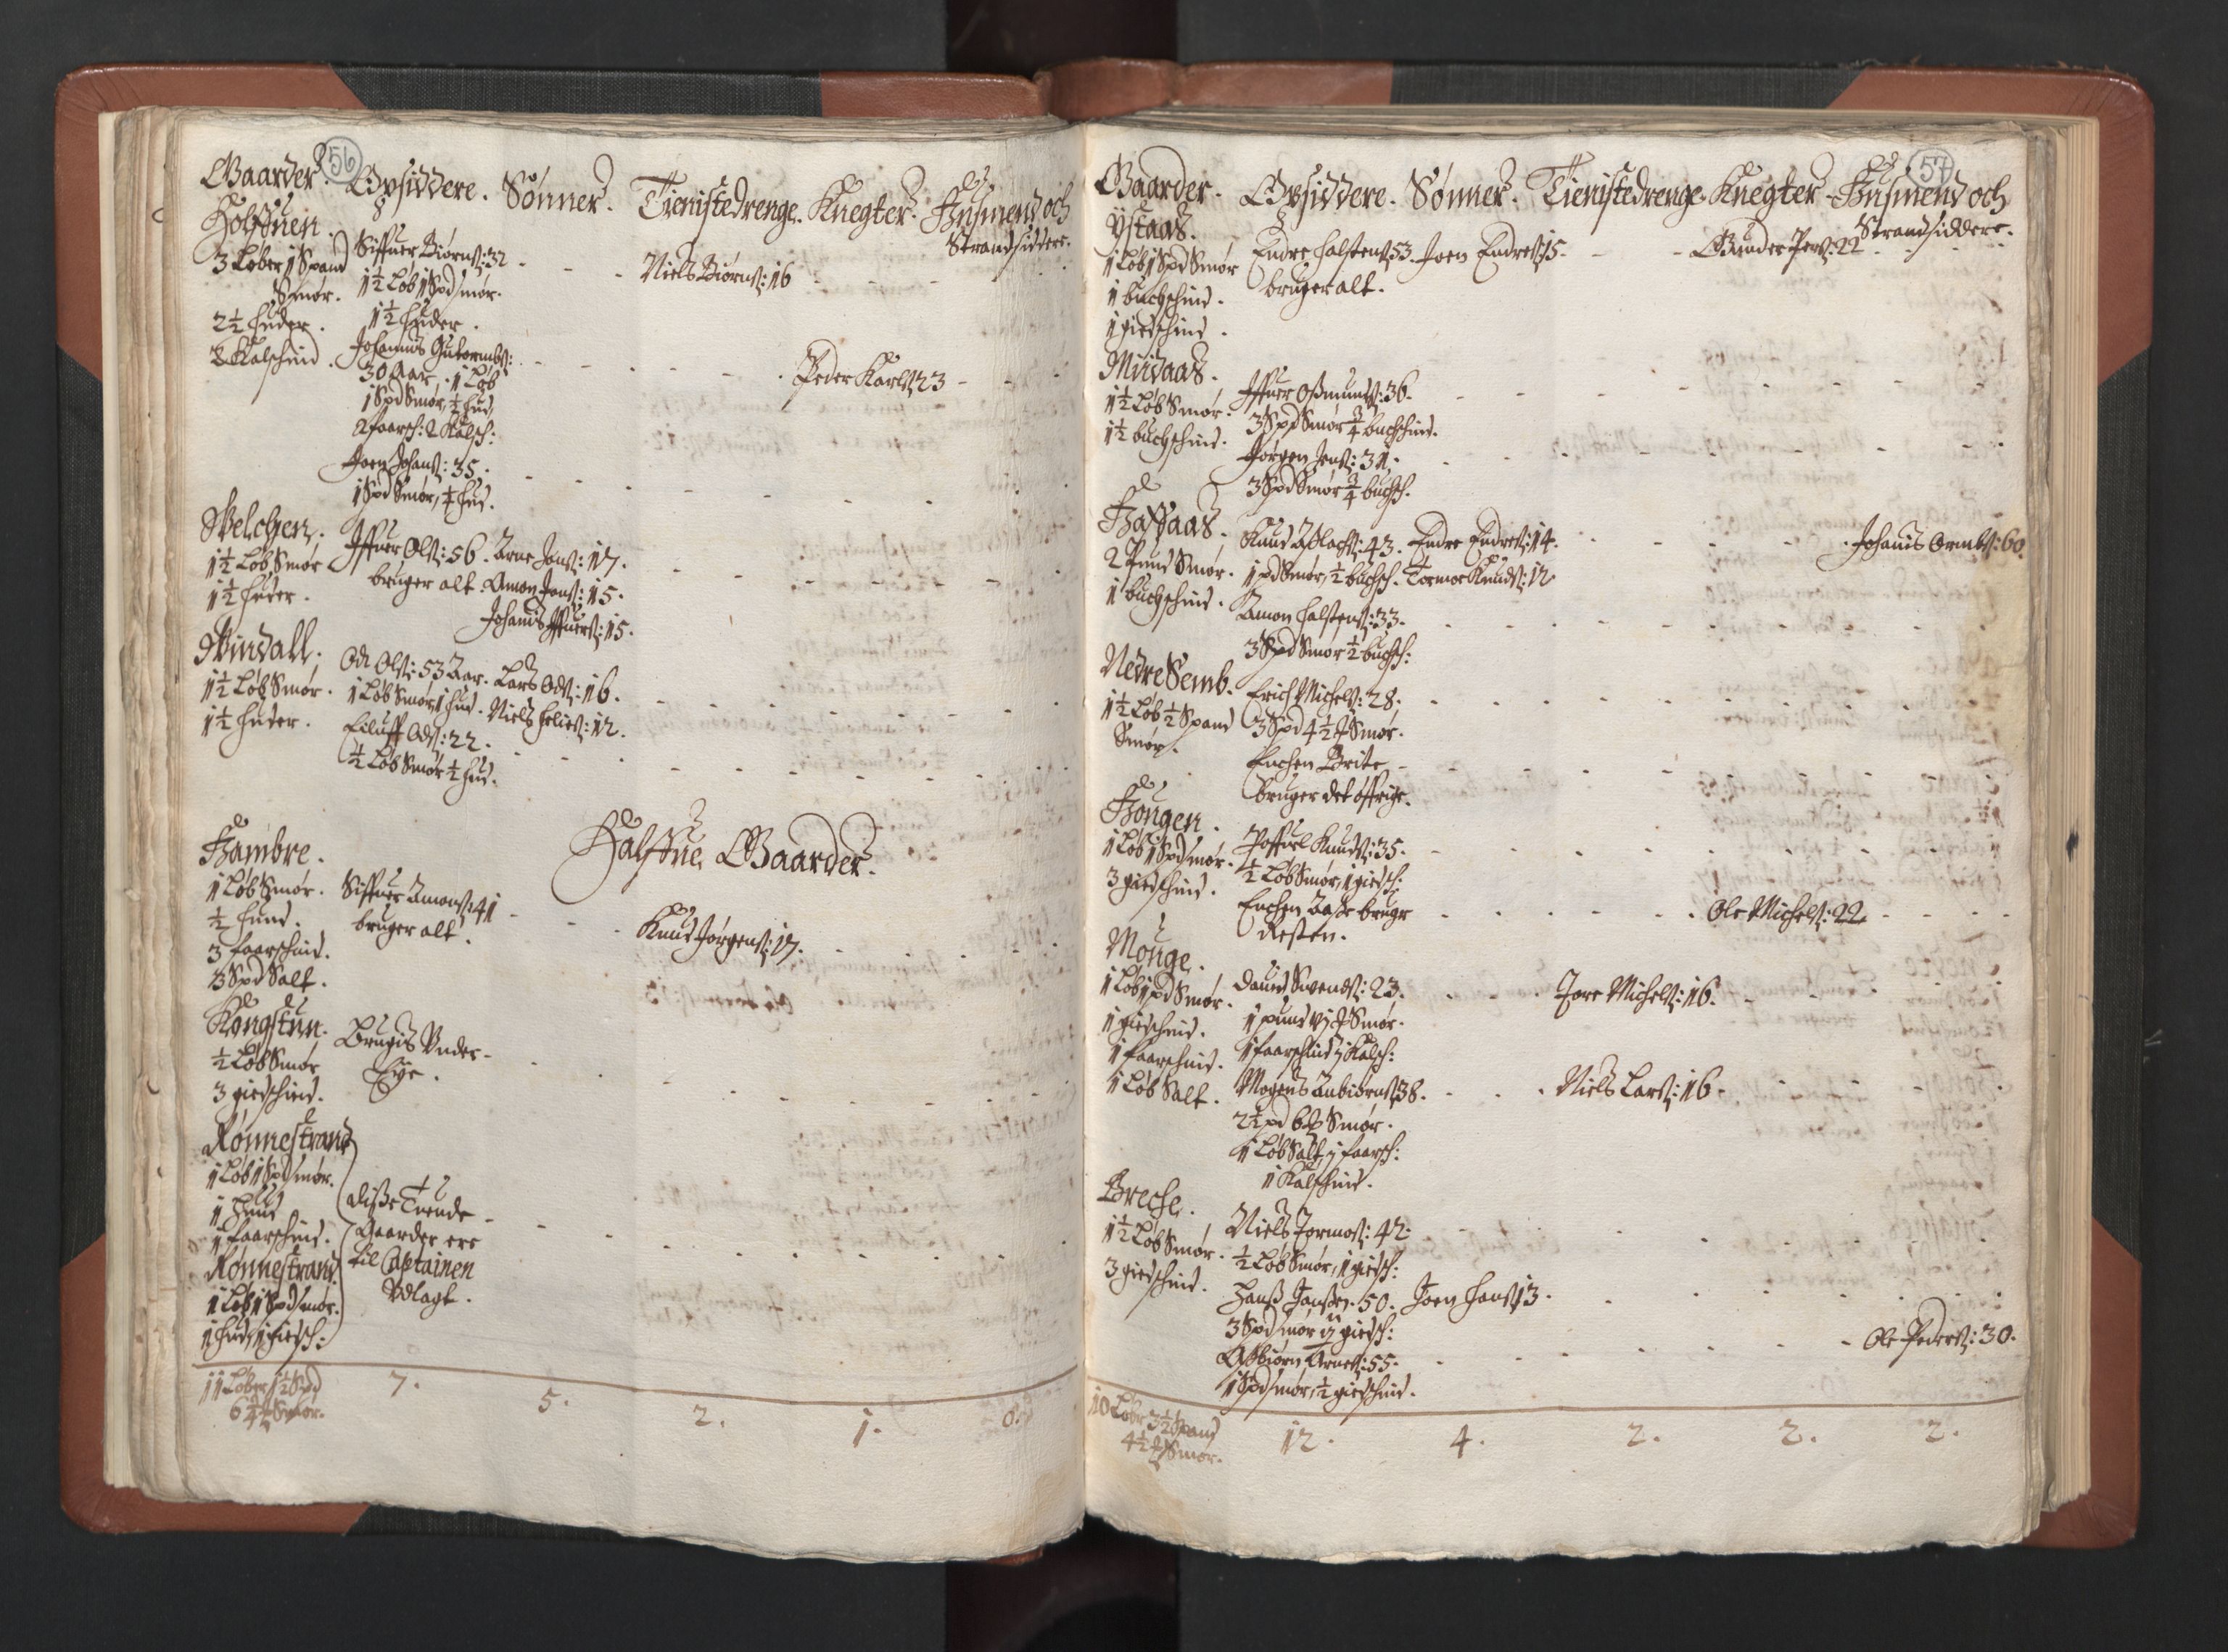 RA, Fogdenes og sorenskrivernes manntall 1664-1666, nr. 14: Hardanger len, Ytre Sogn fogderi og Indre Sogn fogderi, 1664-1665, s. 56-57